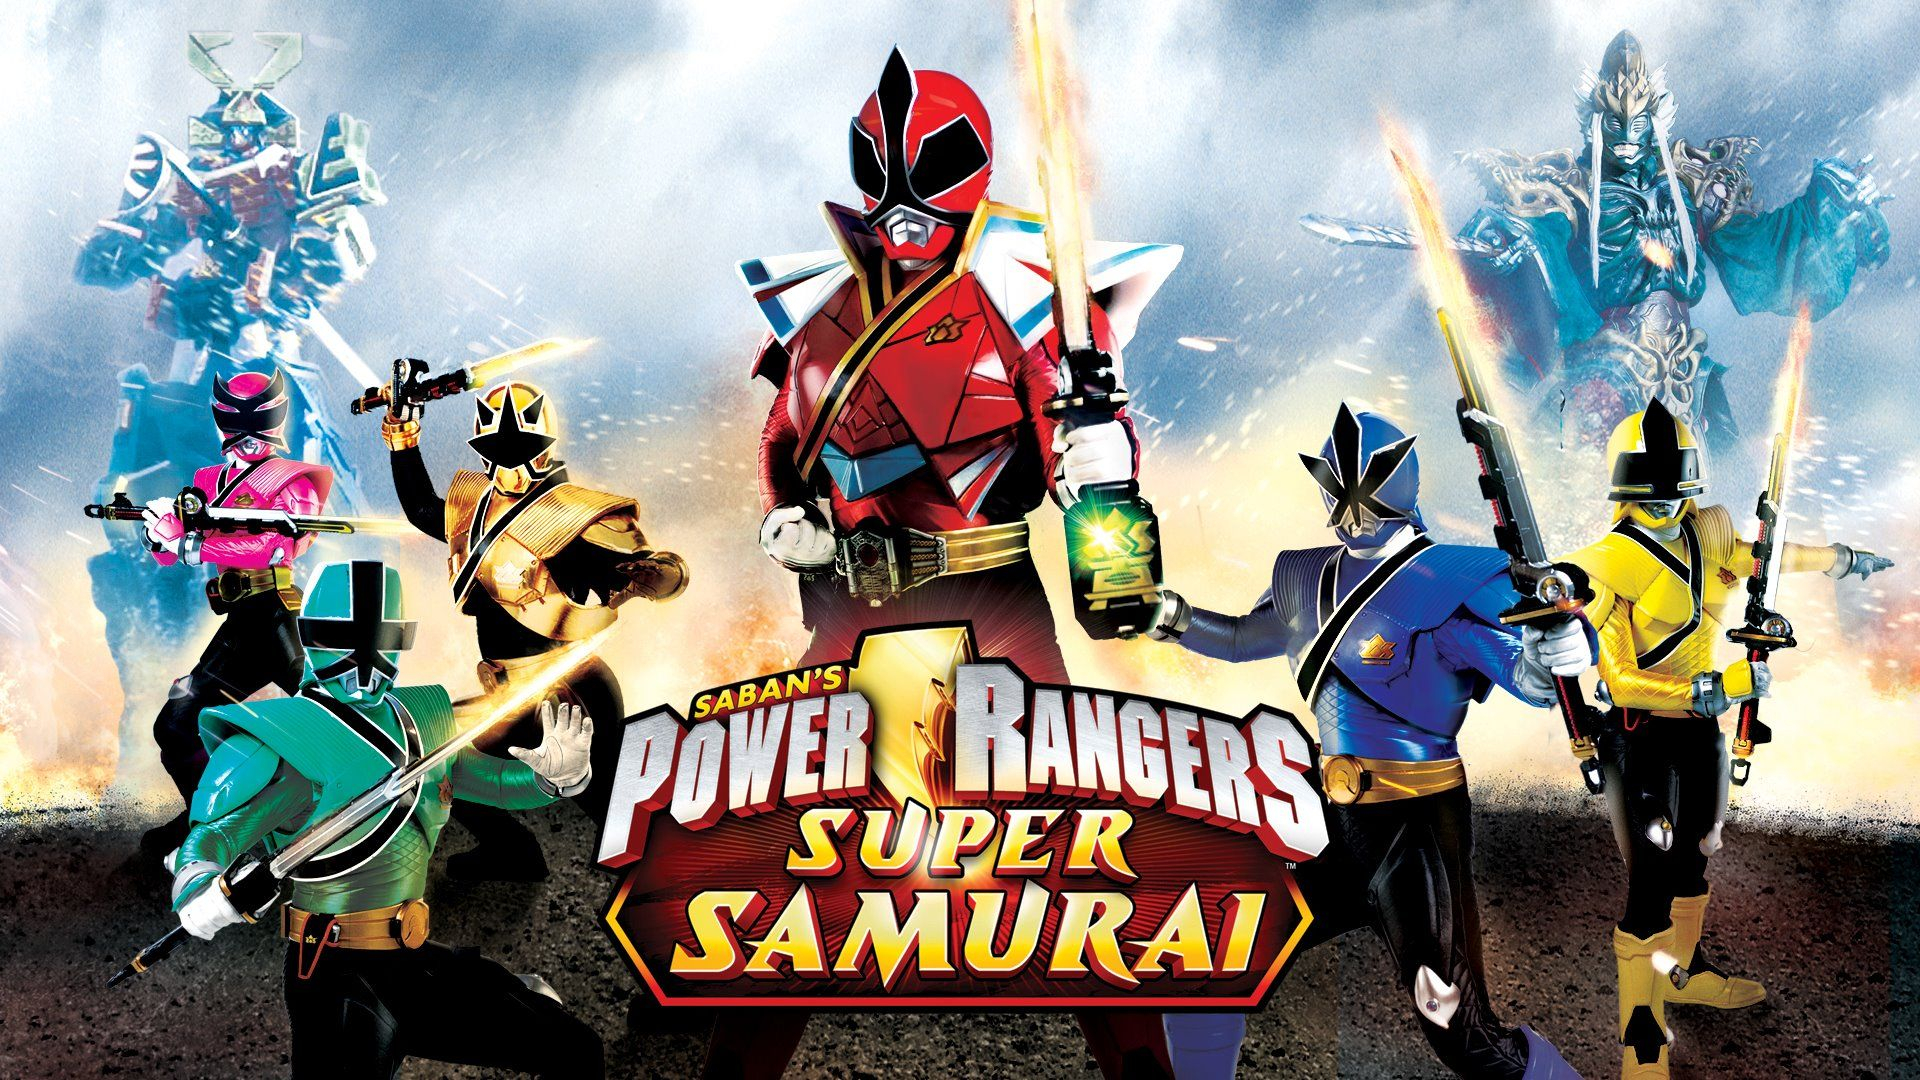 1920x1080 Power Rangers Samurai Wallpaper in 2022 | Power rangers samurai, Power rangers super samurai, Super samurai